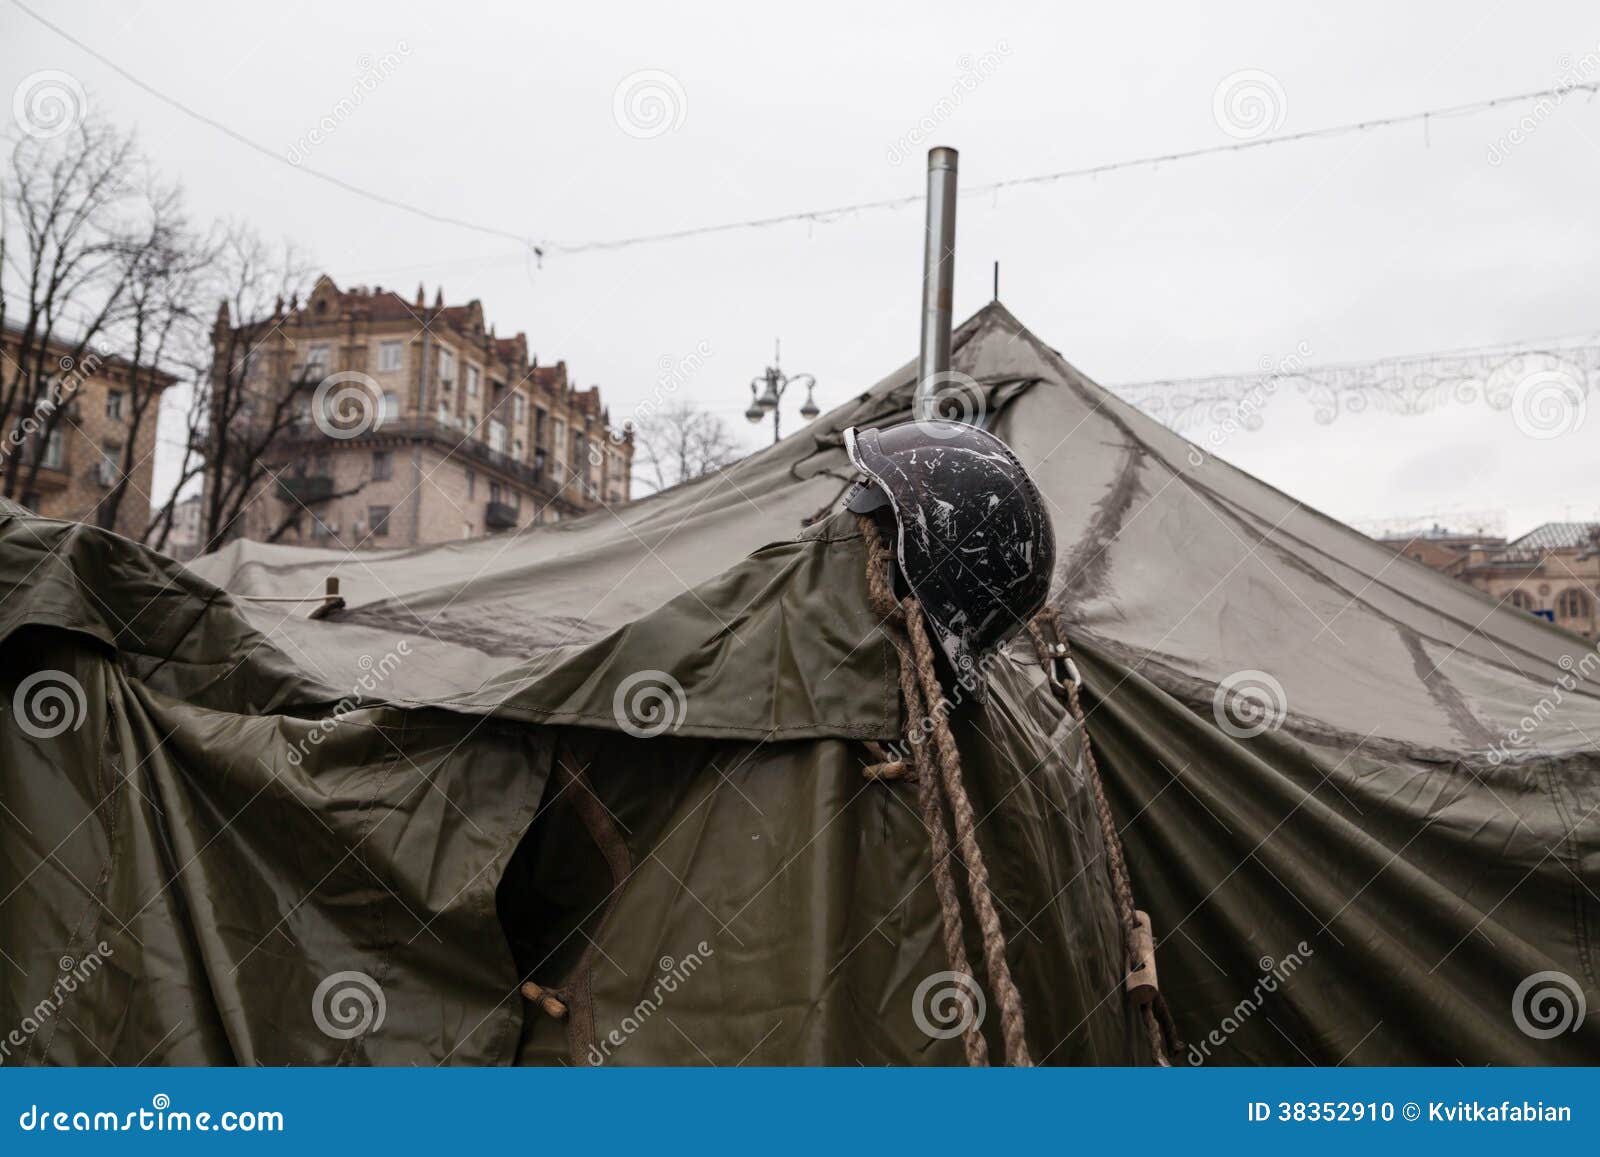 camp of protesters on maidan, euromaidan, kiev